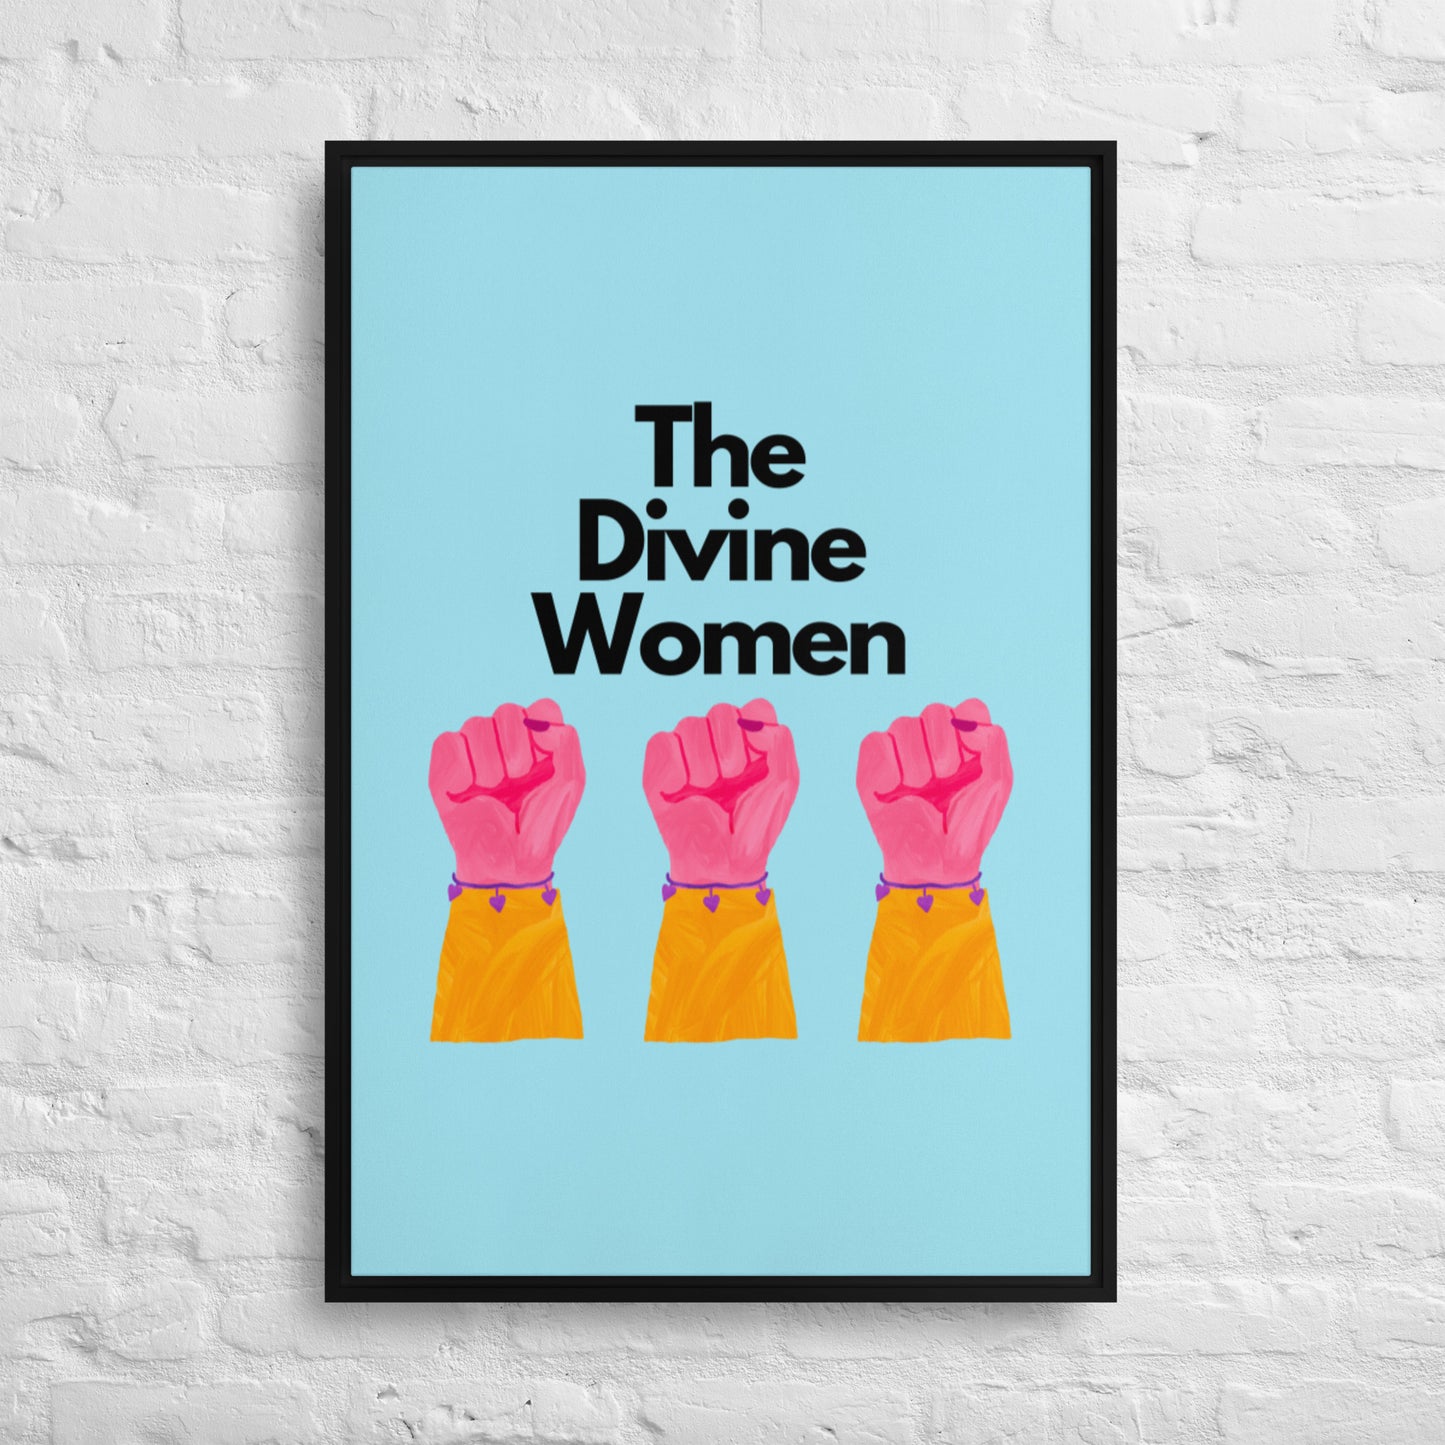 The Divine Women Framed Canvas